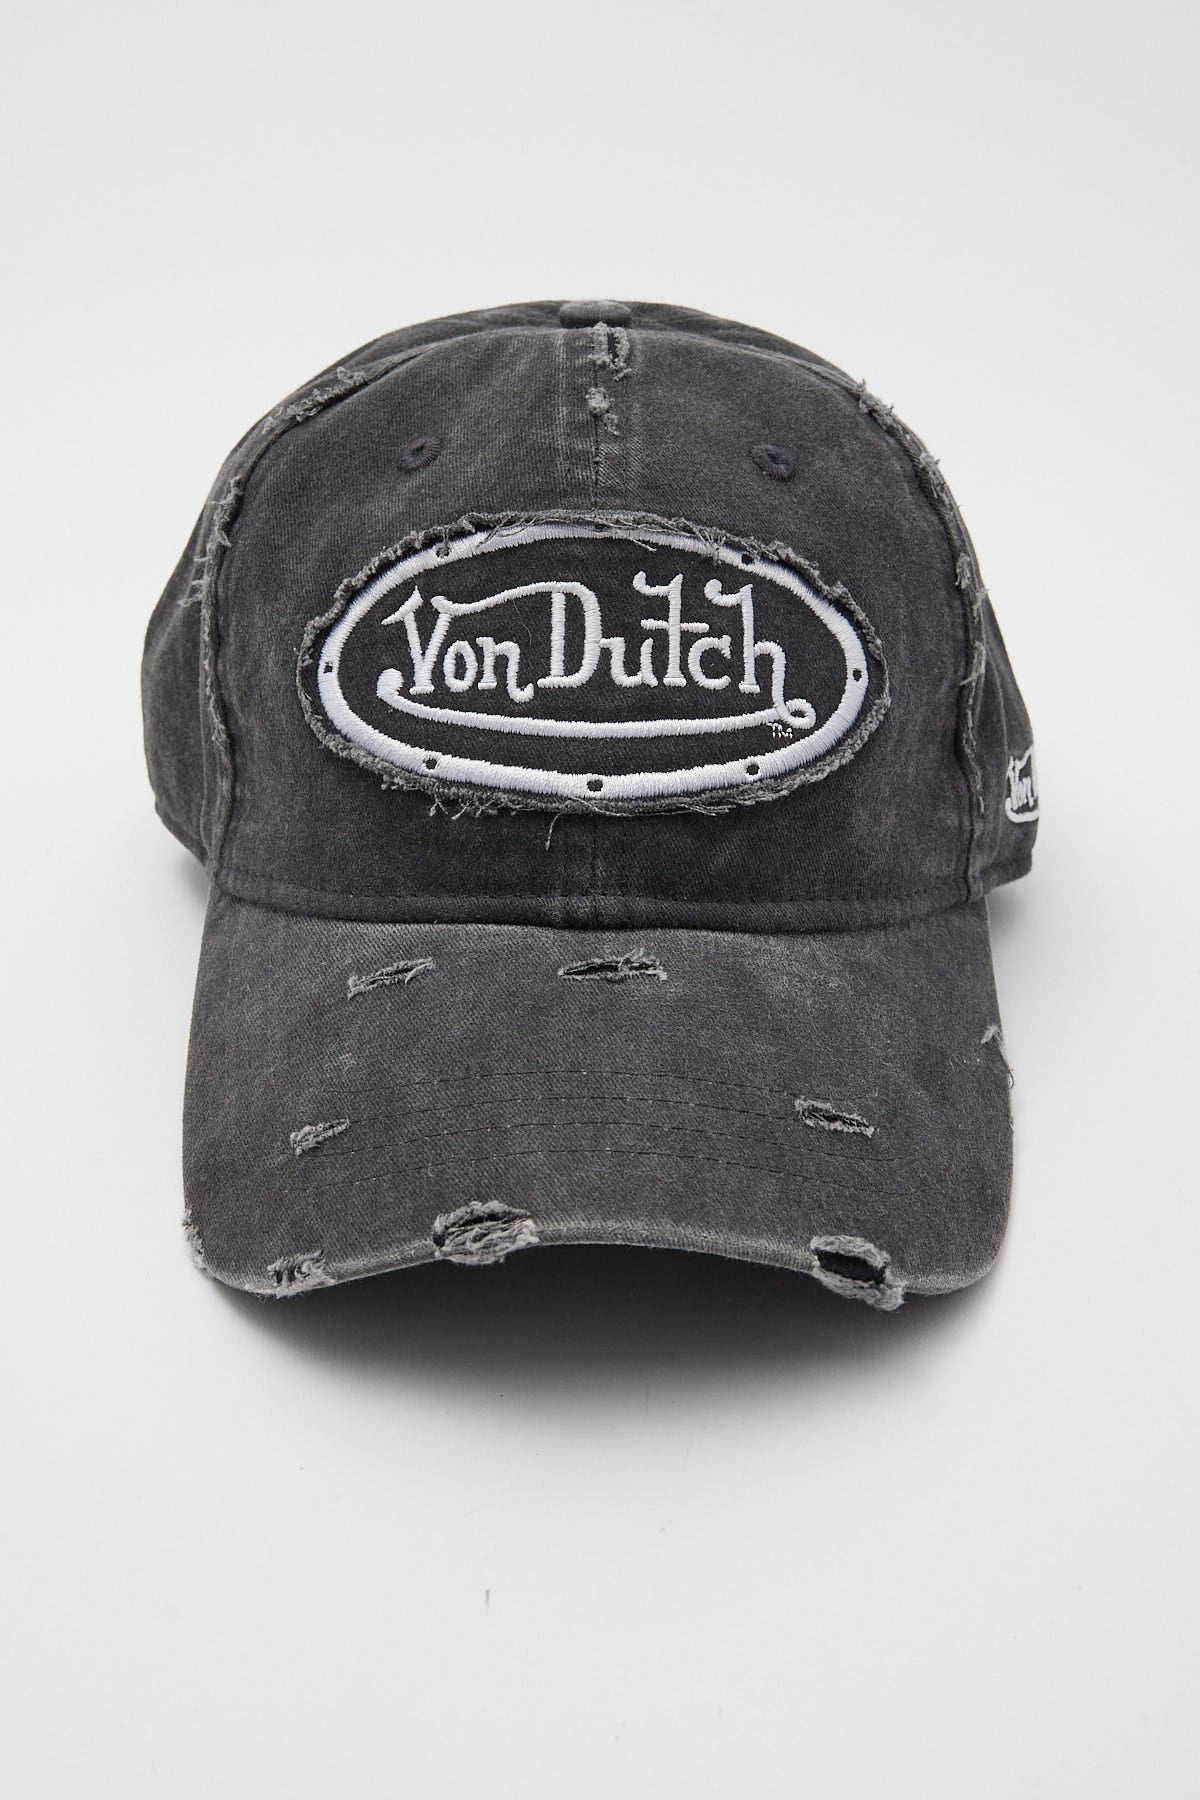 Von Dutch Washed Black Canvas Embroidery Patch Destroyed Wash Cap Black Wash/Grey Embro